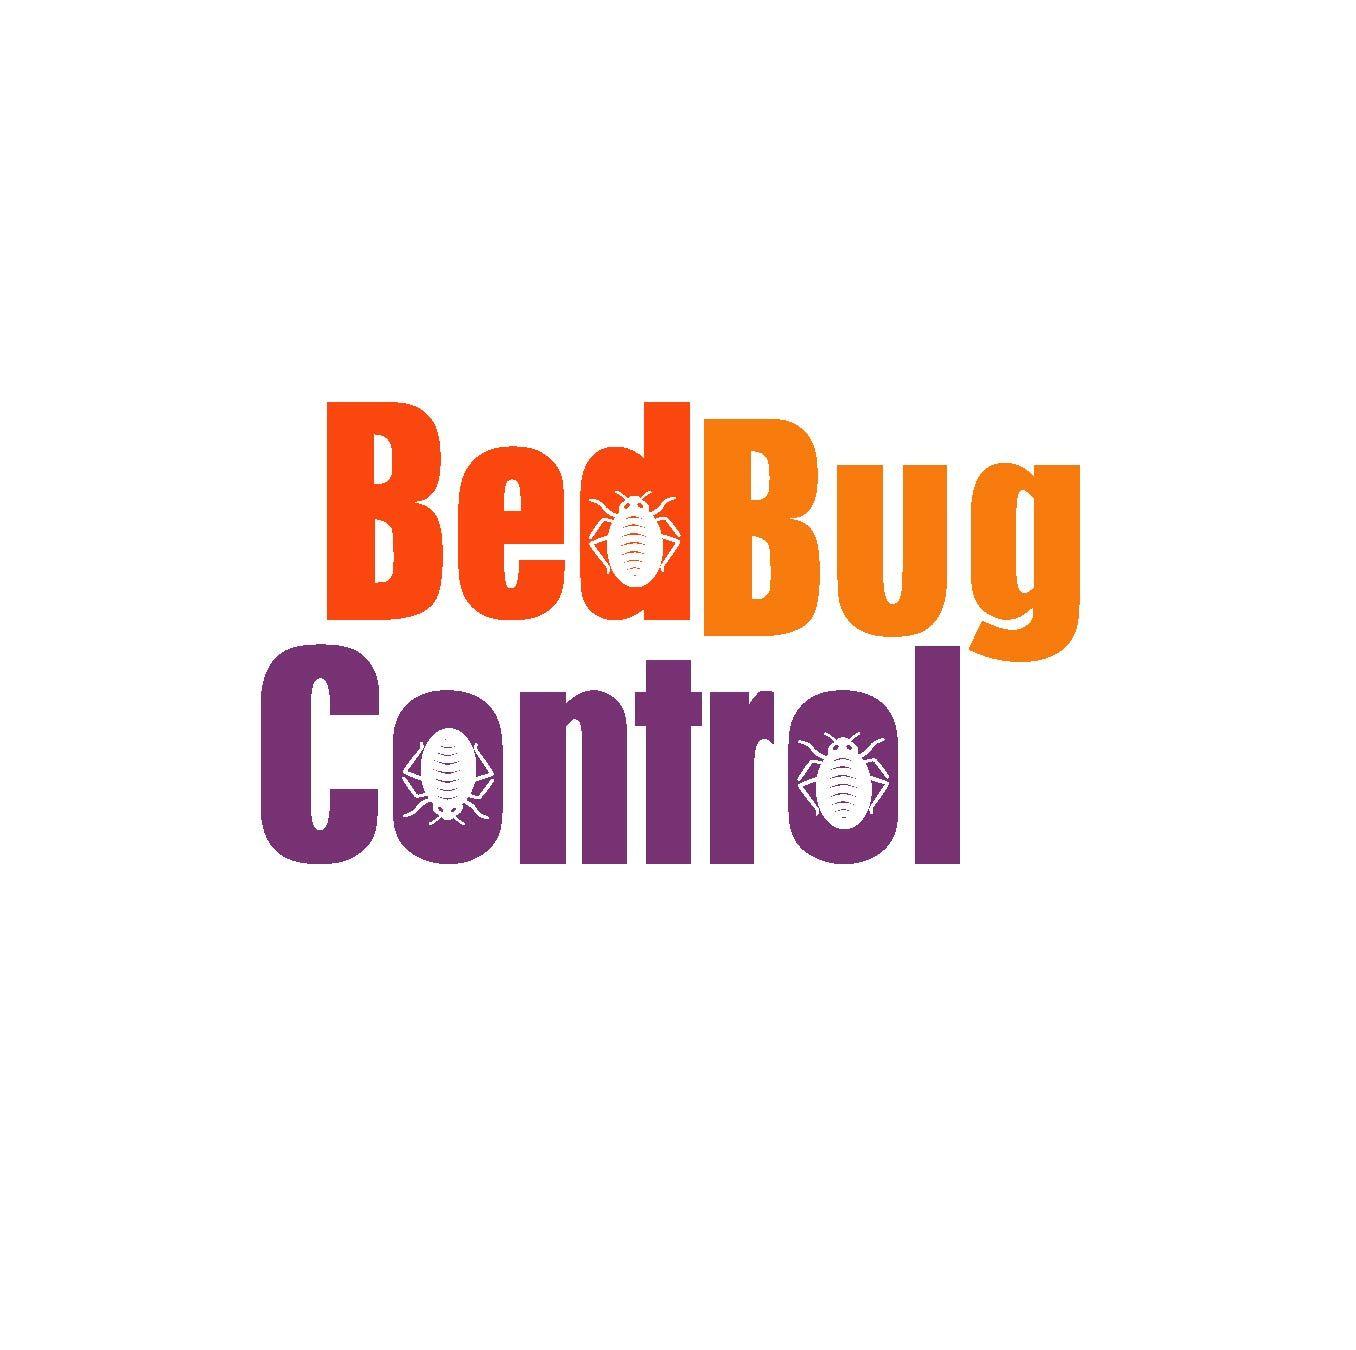 GCB Logo - Playful, Modern, It Company Logo Design for Bed Bug Control